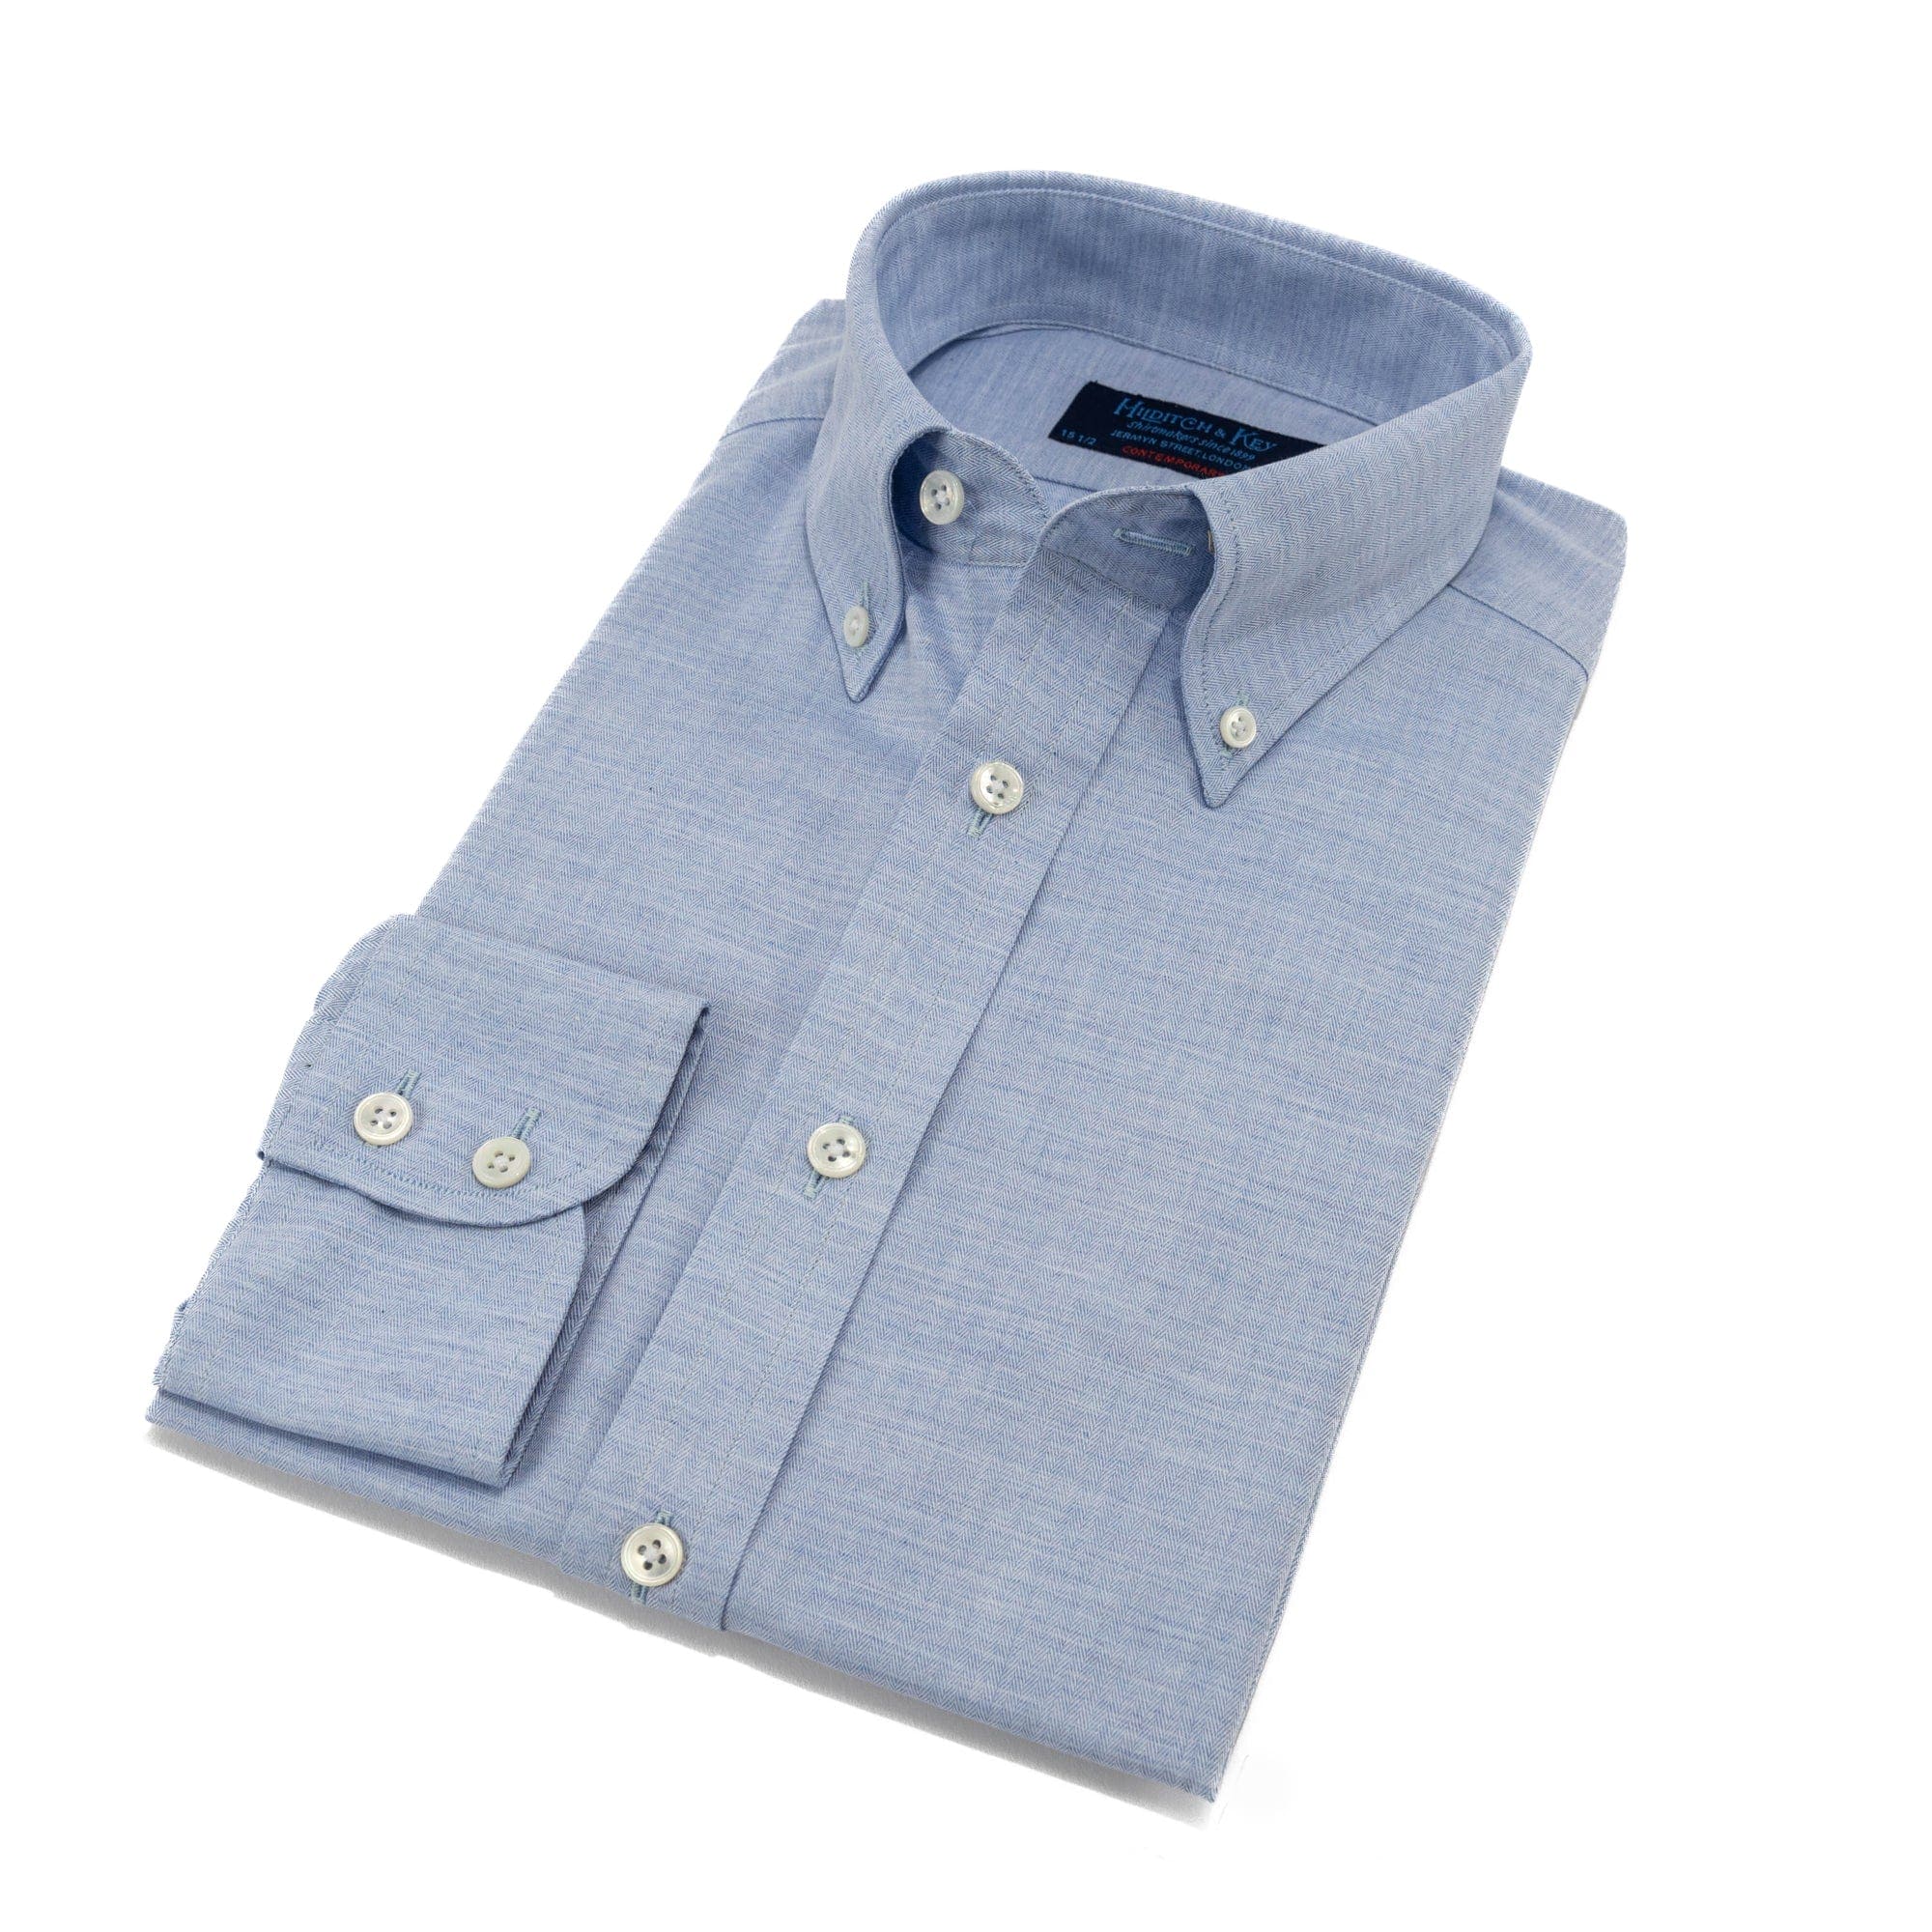 Contemporary Fit, Button Down Collar, 2 Button Cuff Shirt in a Light Blue Fine Herringbone Cotton